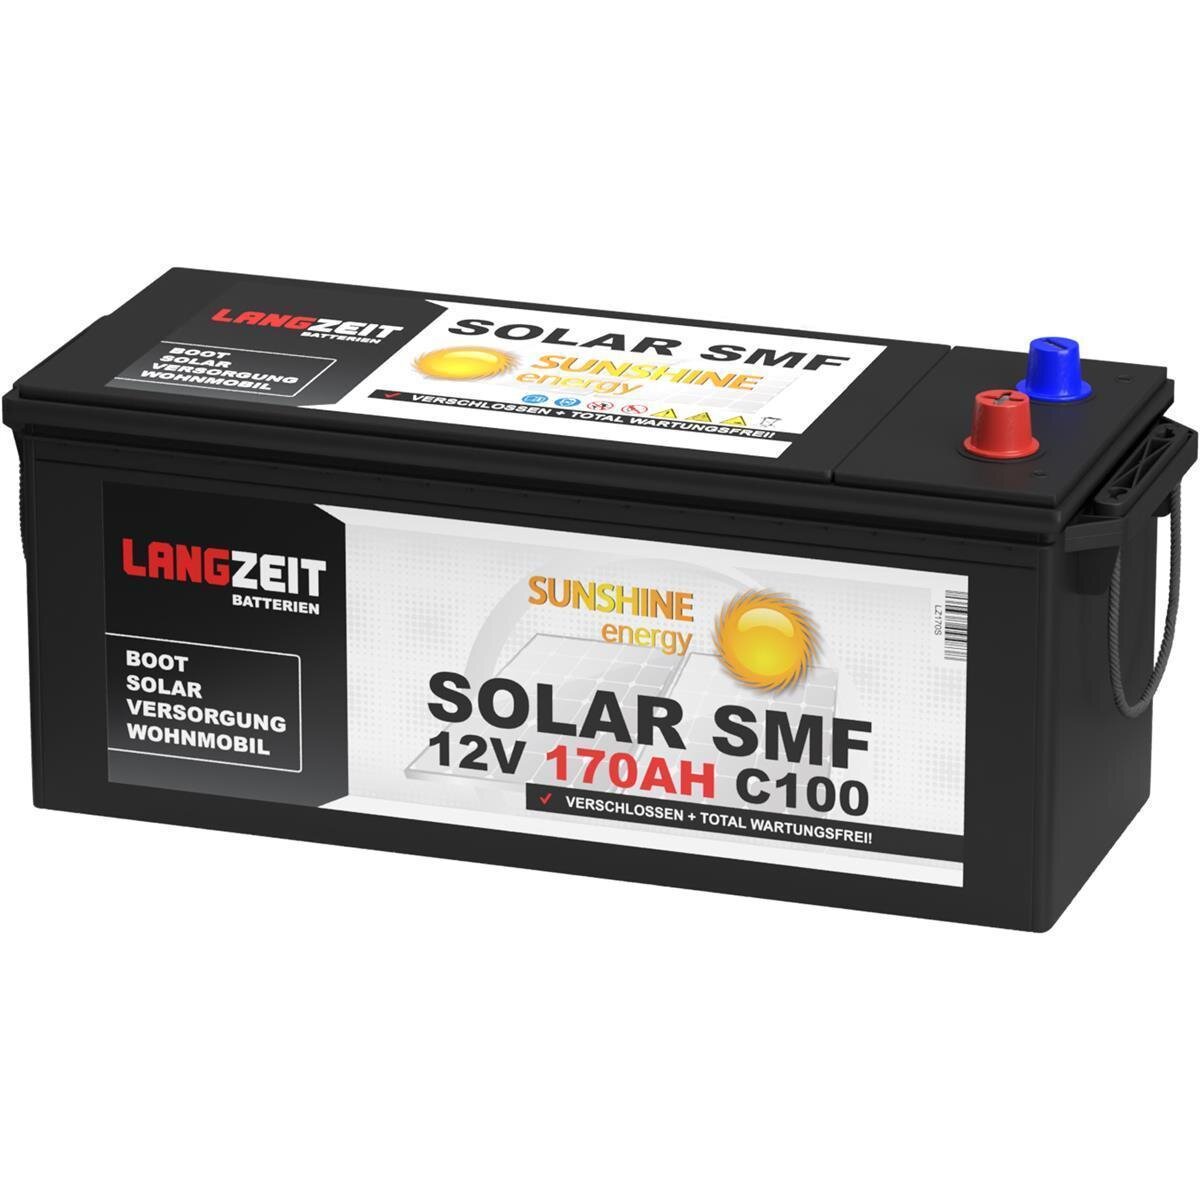 EXAKT Solar DCS Solarbatterie 280Ah 12V, 269,66 €